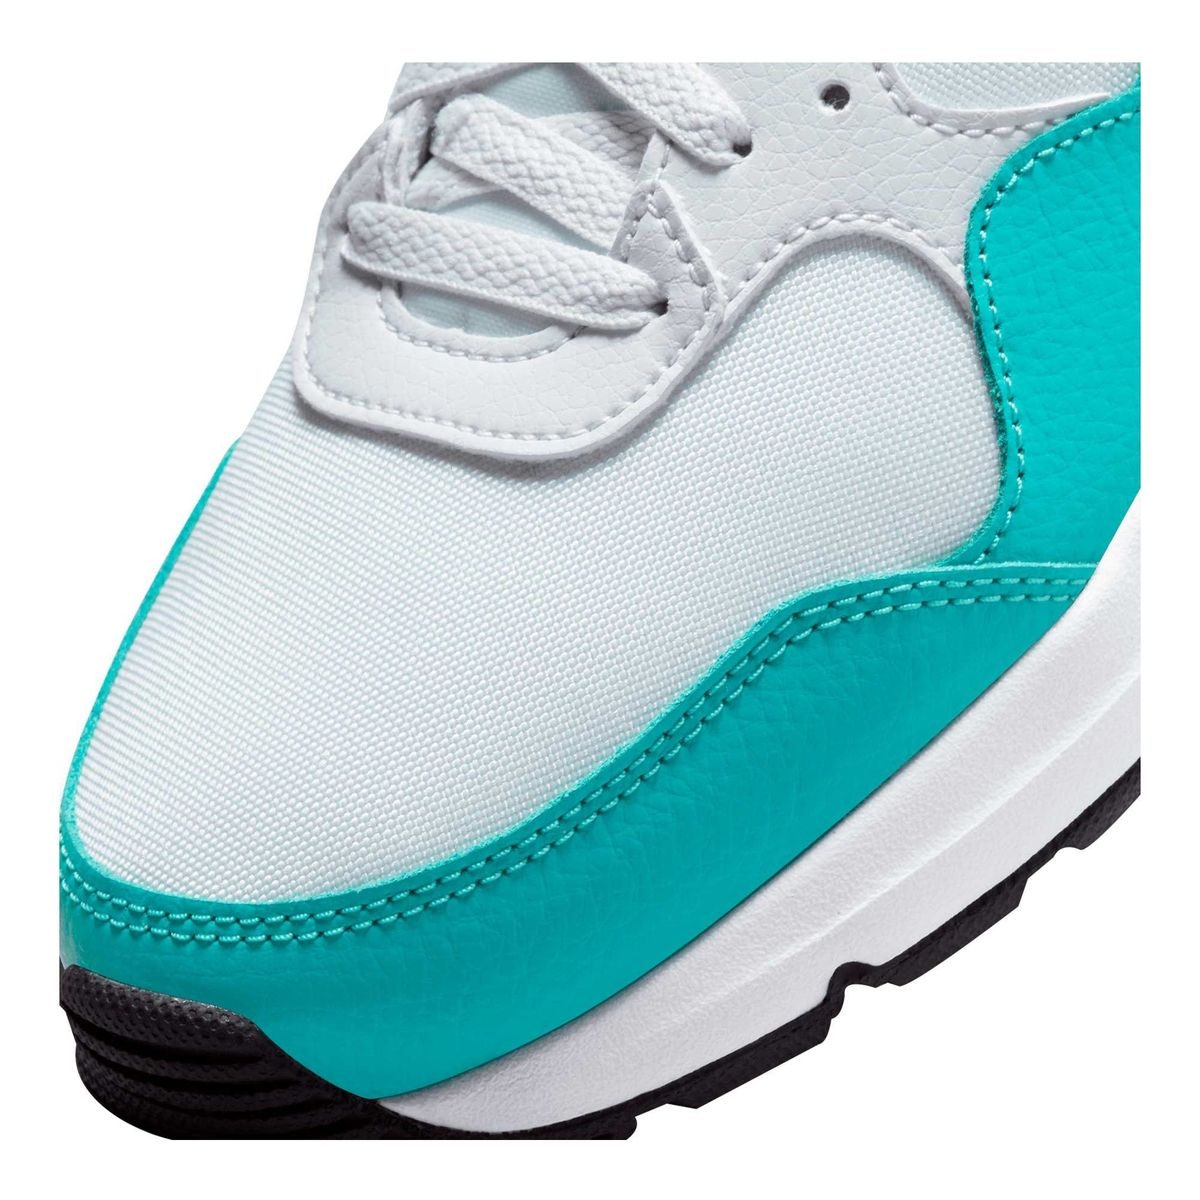 Chaussures de sport homme Nike air max sc gris